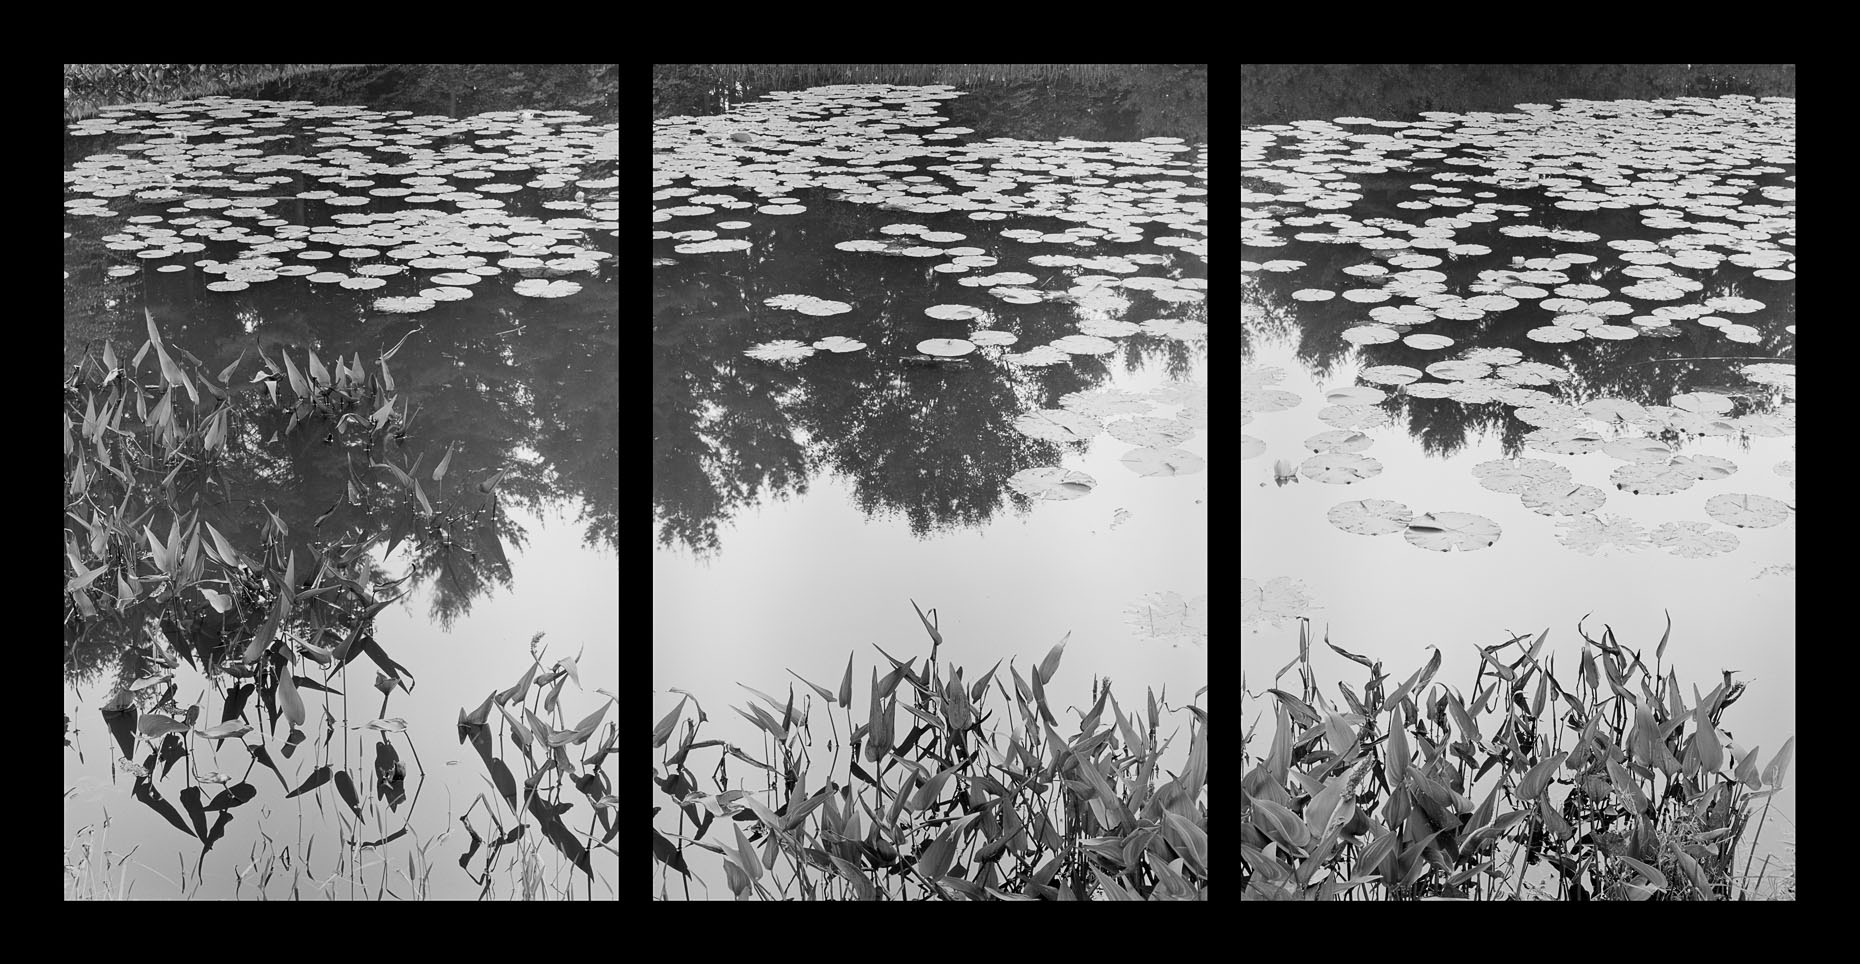 02_FL10D Frewsburg Pond.jpg